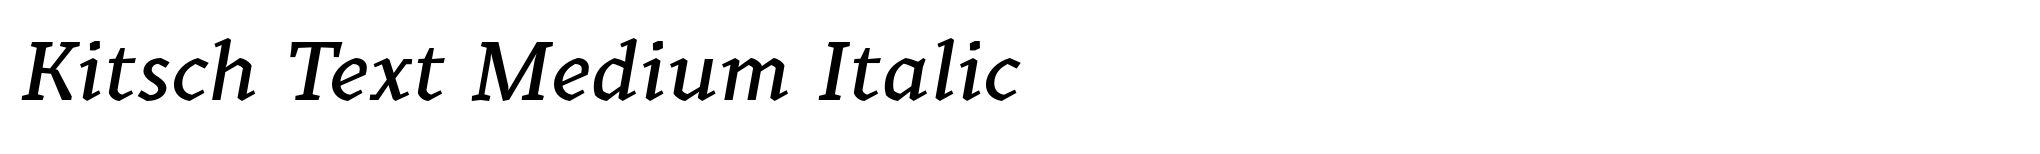 Kitsch Text Medium Italic image